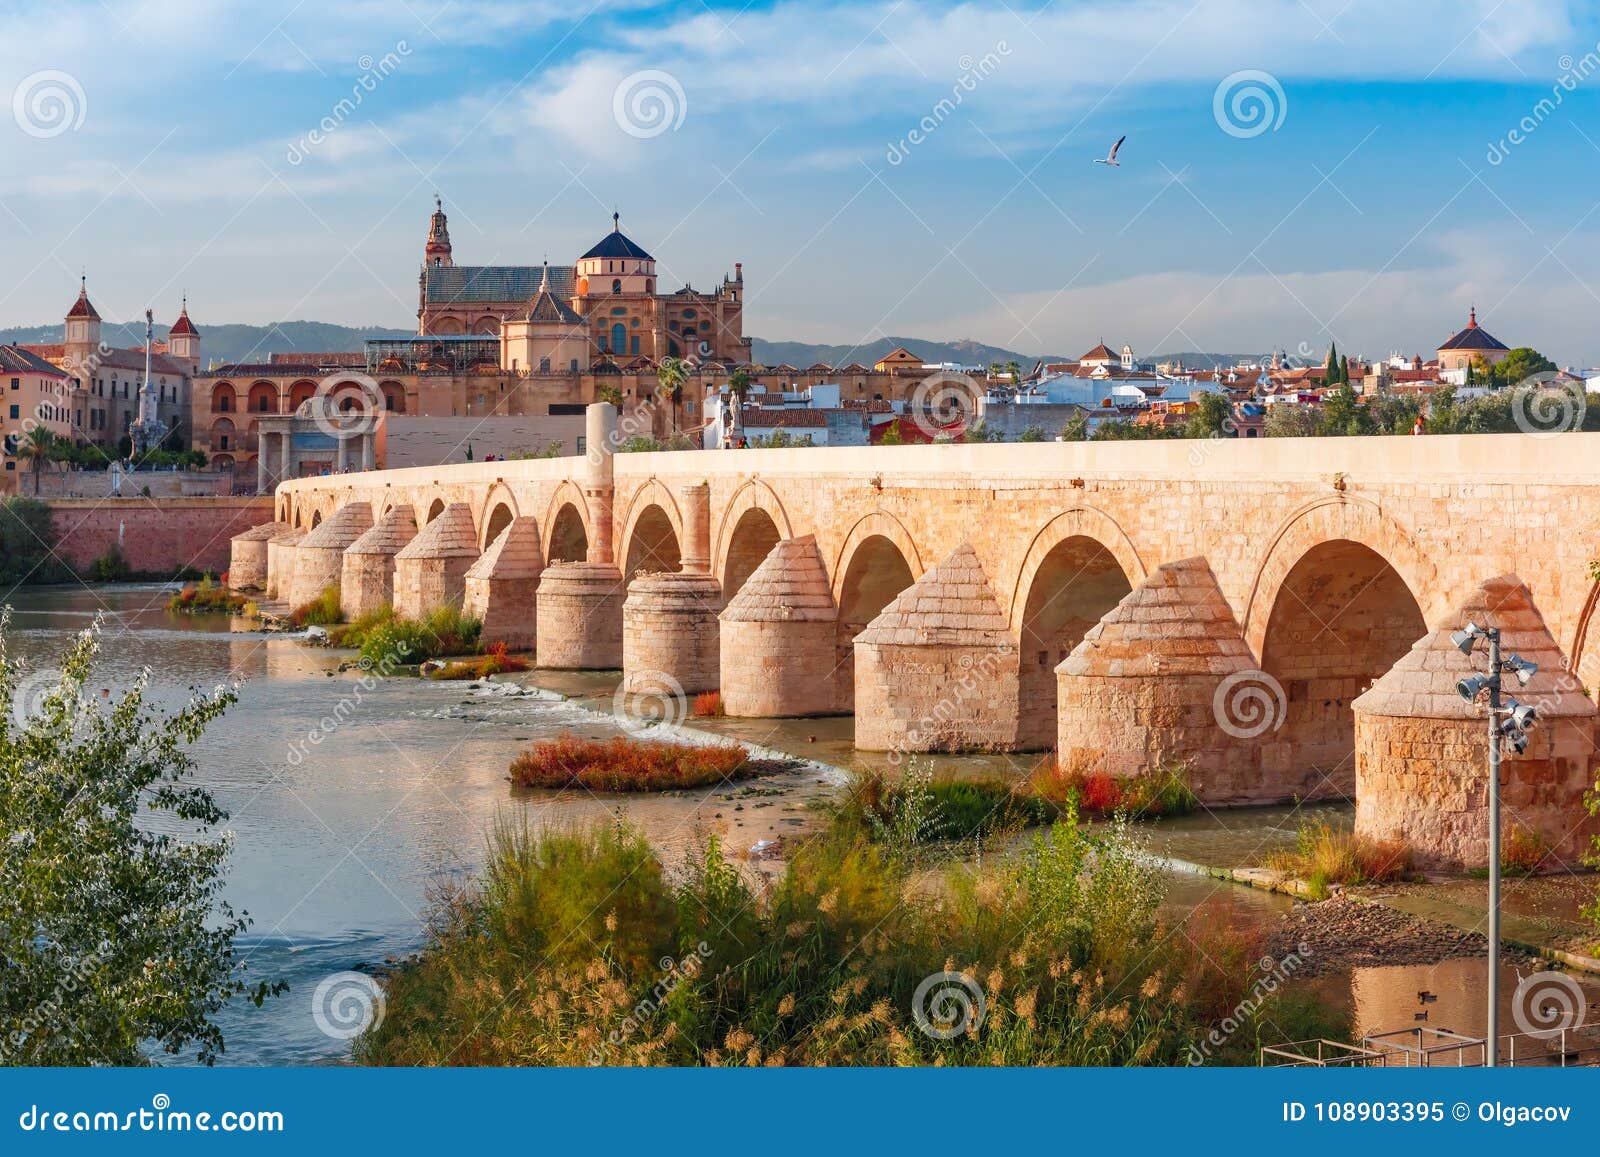 mezquita and roman bridge in cordoba, spain